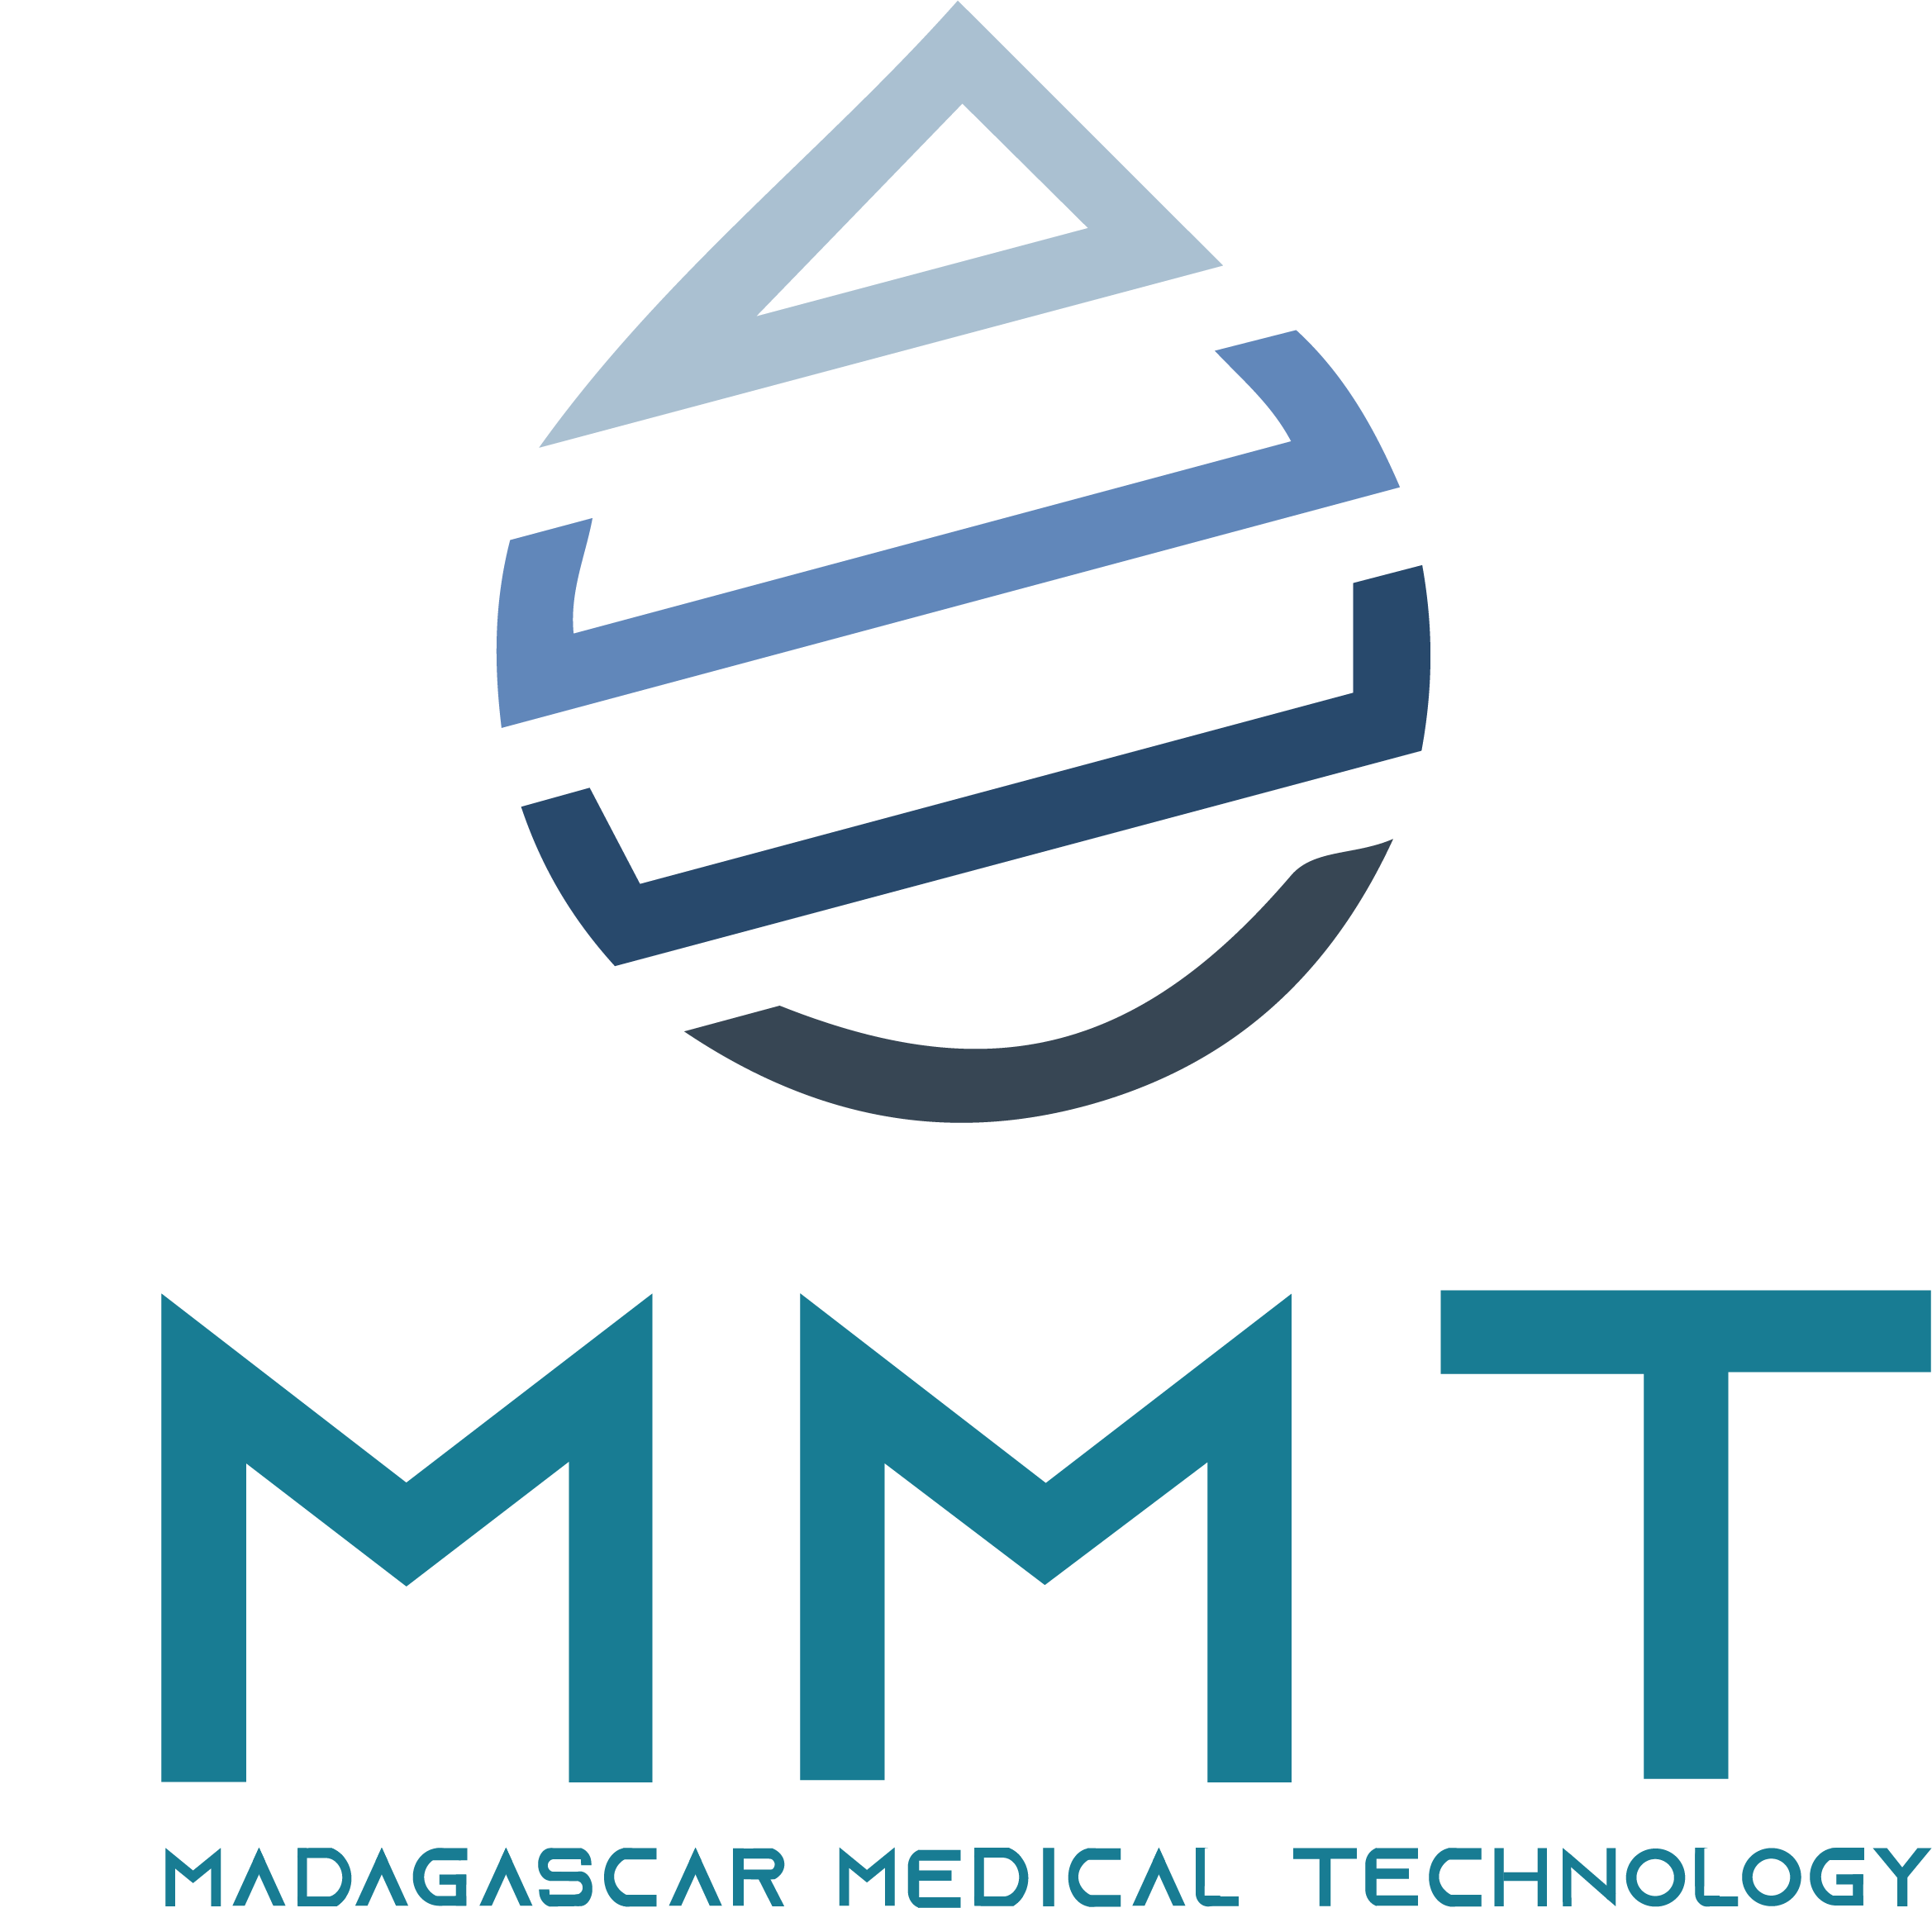 Madagascar Medical Technology